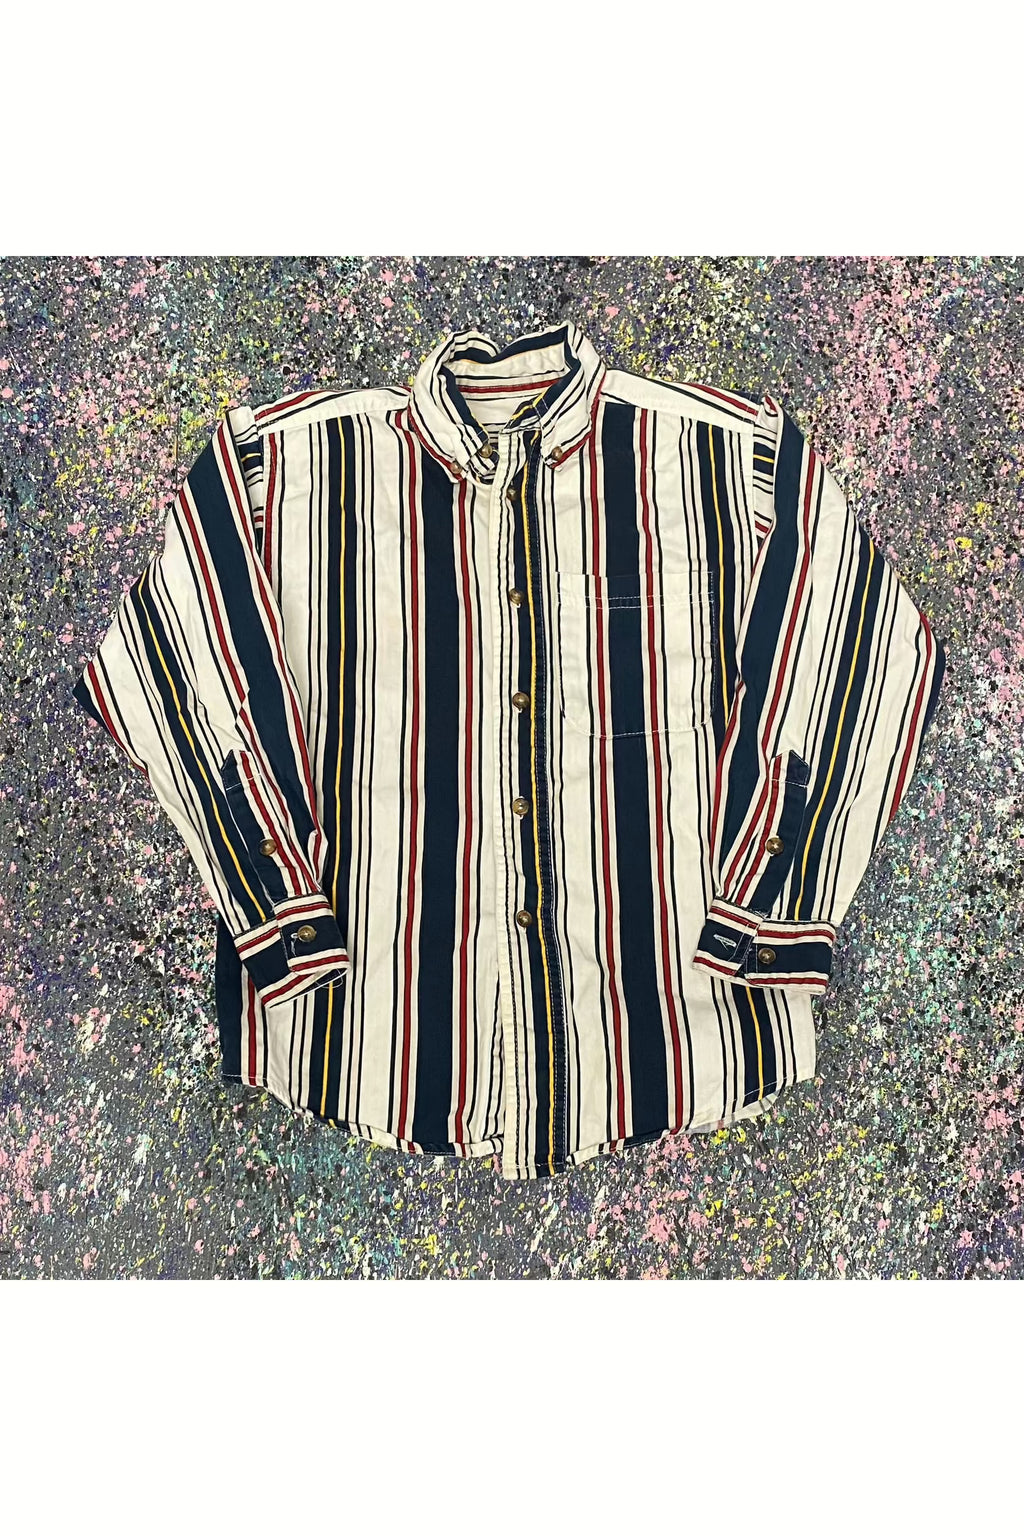 Vintage Express Boys Button Up Shirt- YTH S (8-10)